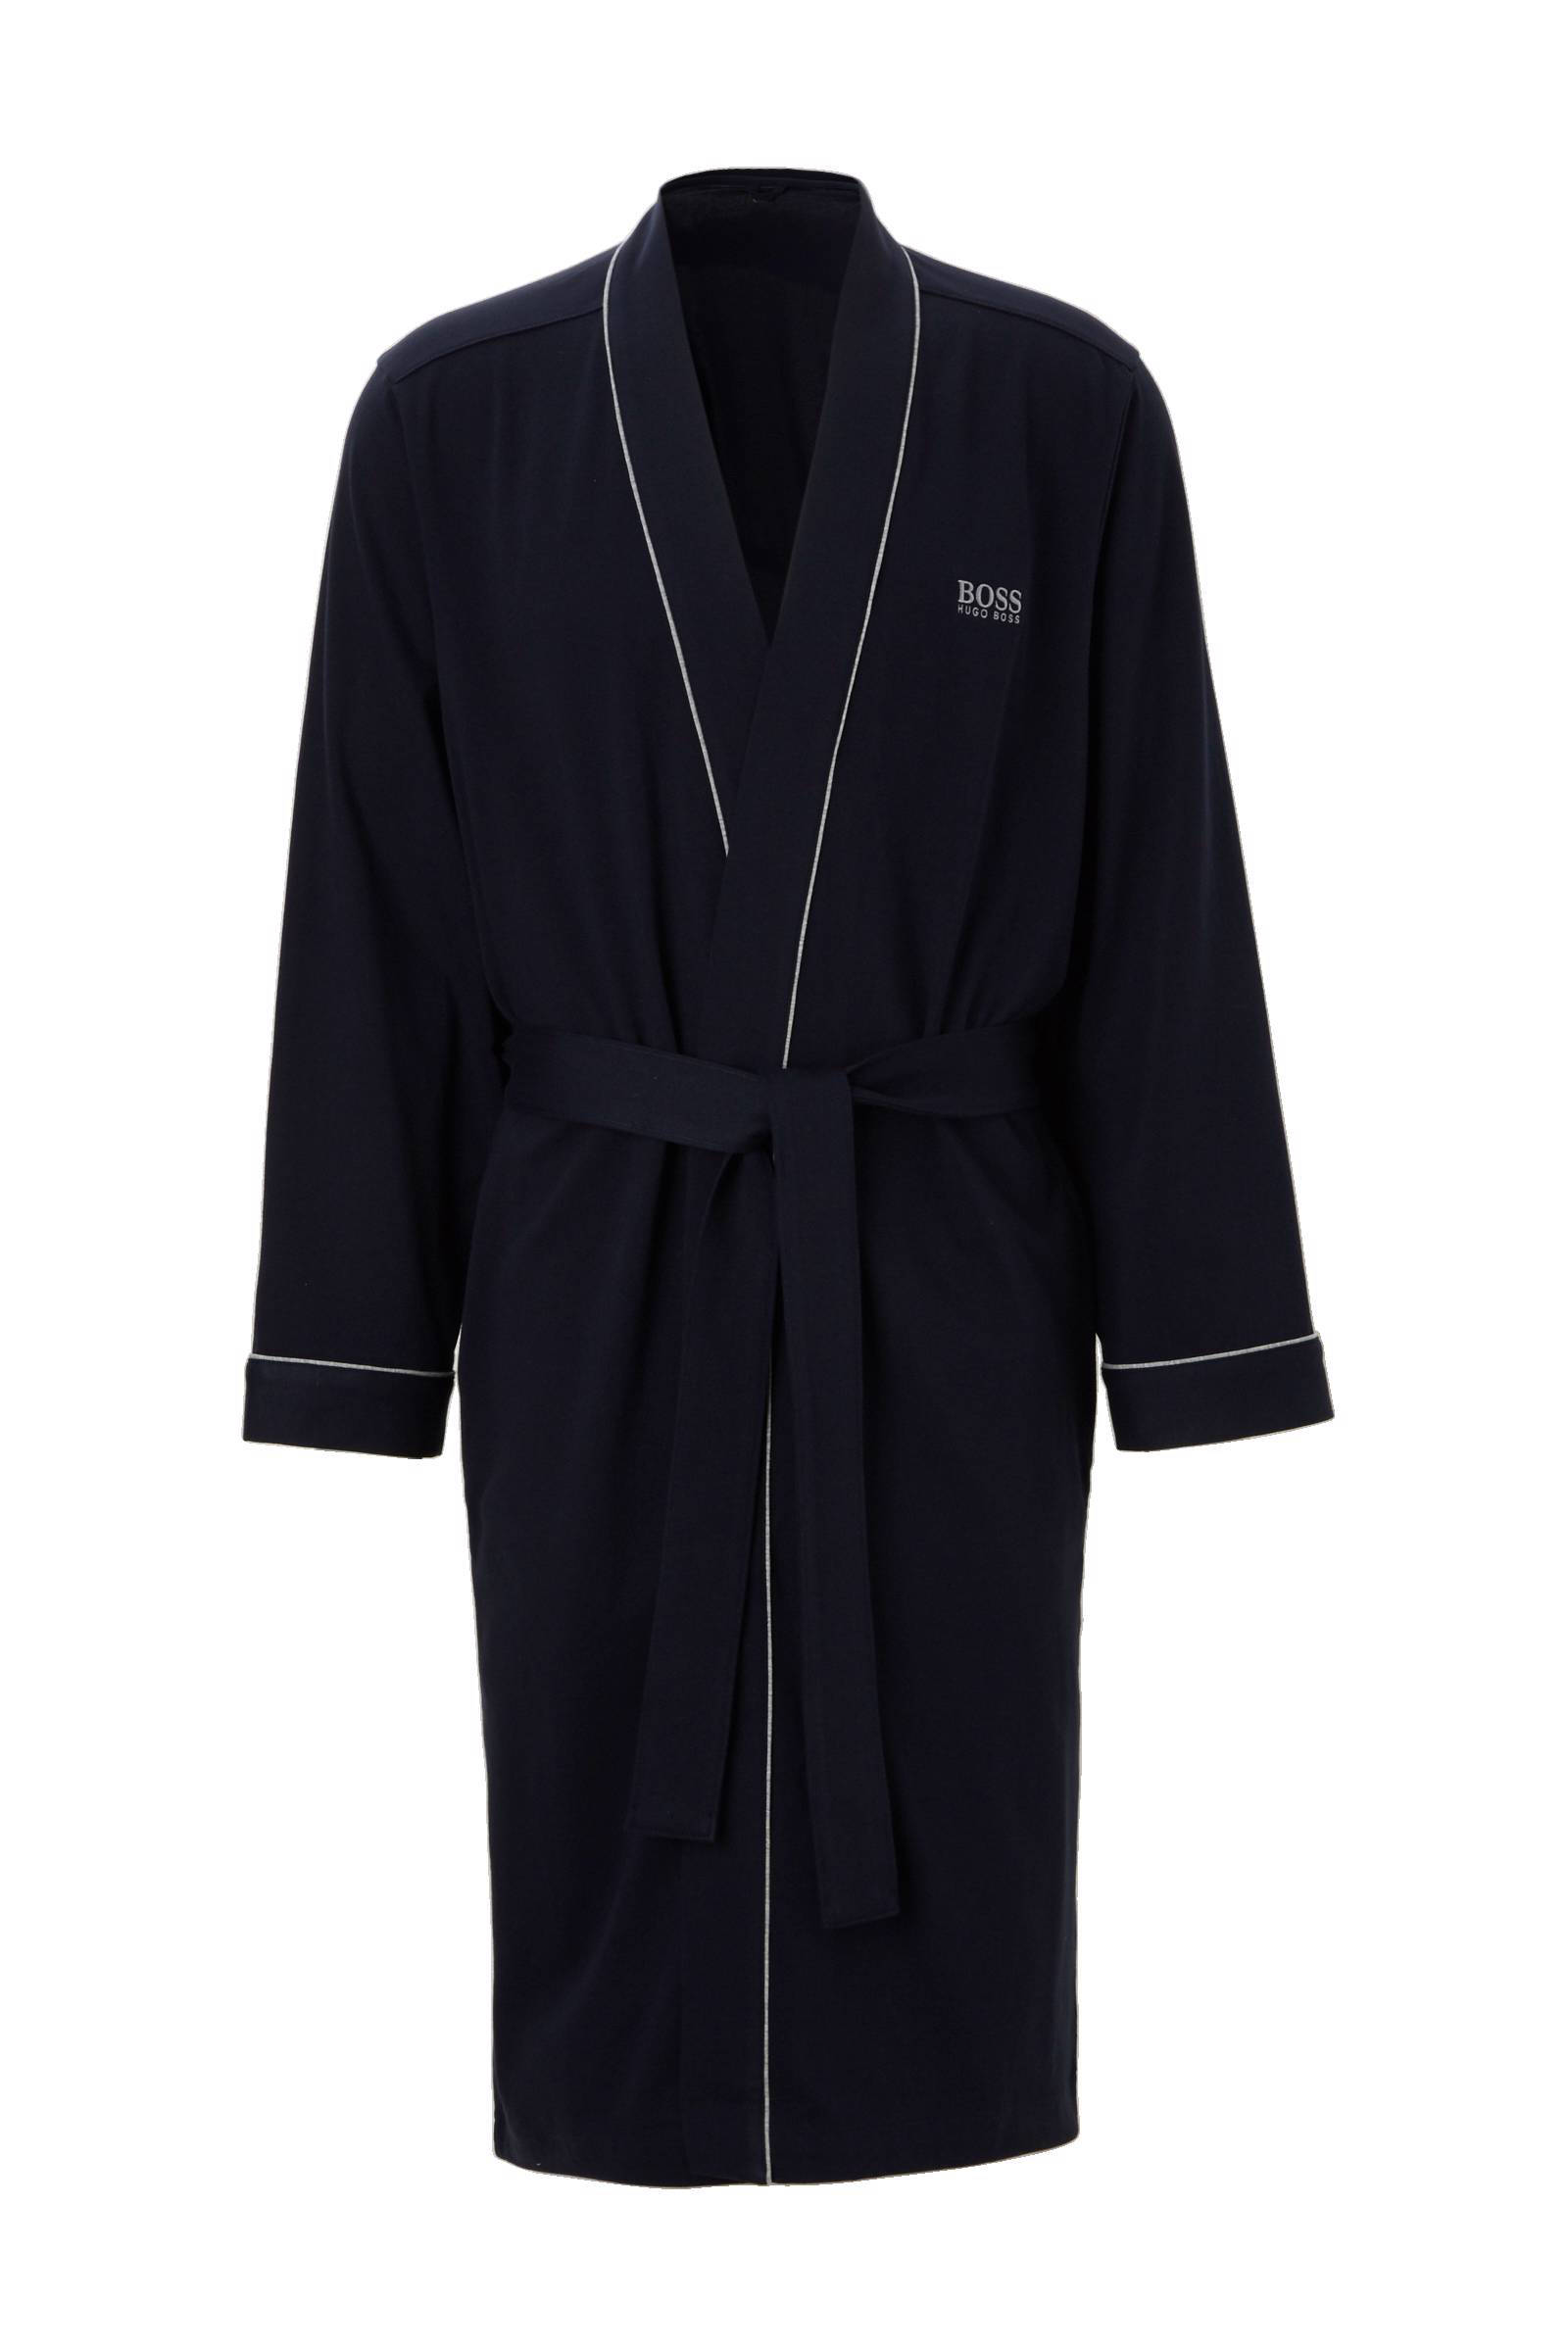 Hugo Boss badjas Kimono donkerblauw online kopen